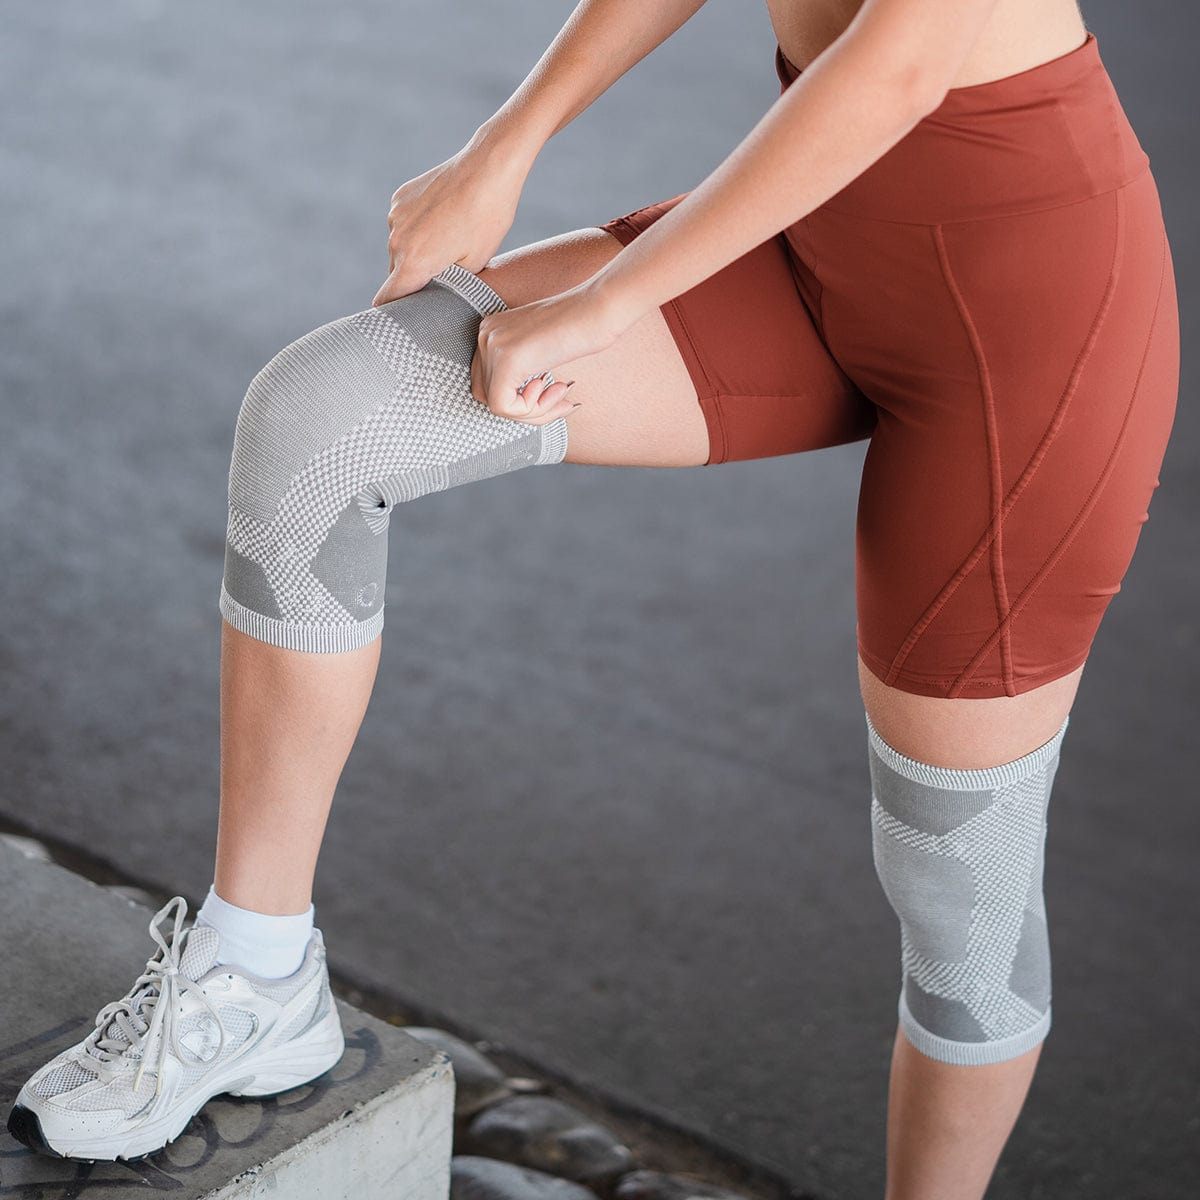 Magnetic Knee Braces: Reduce Knee Pain - Knee Pain Explained